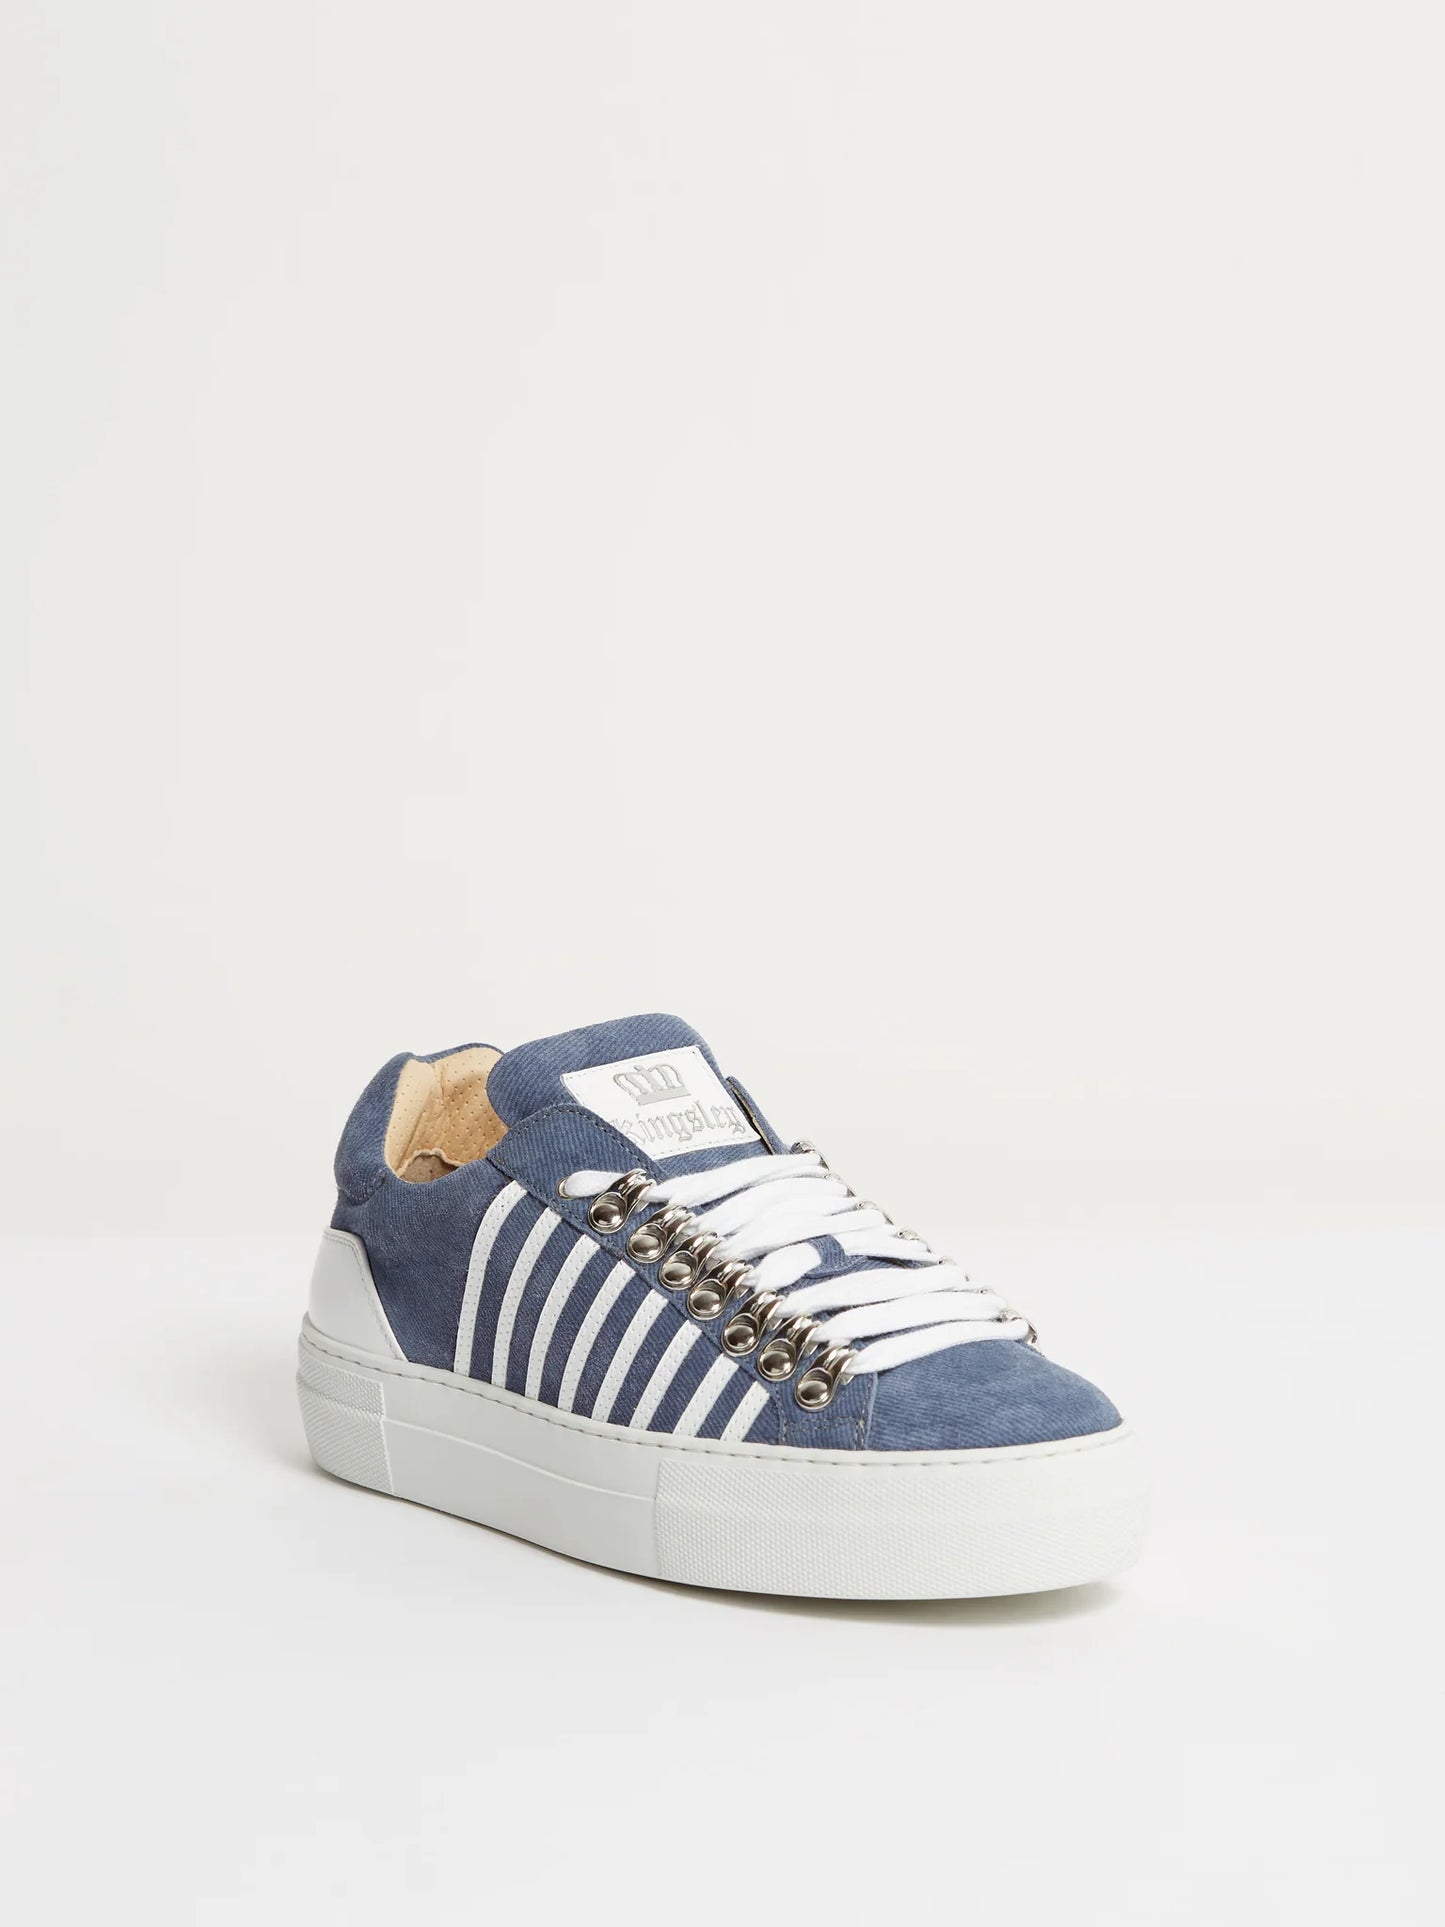 Kingsley Sky Sneakers - Sensory Blue Grey/ White - Size 38